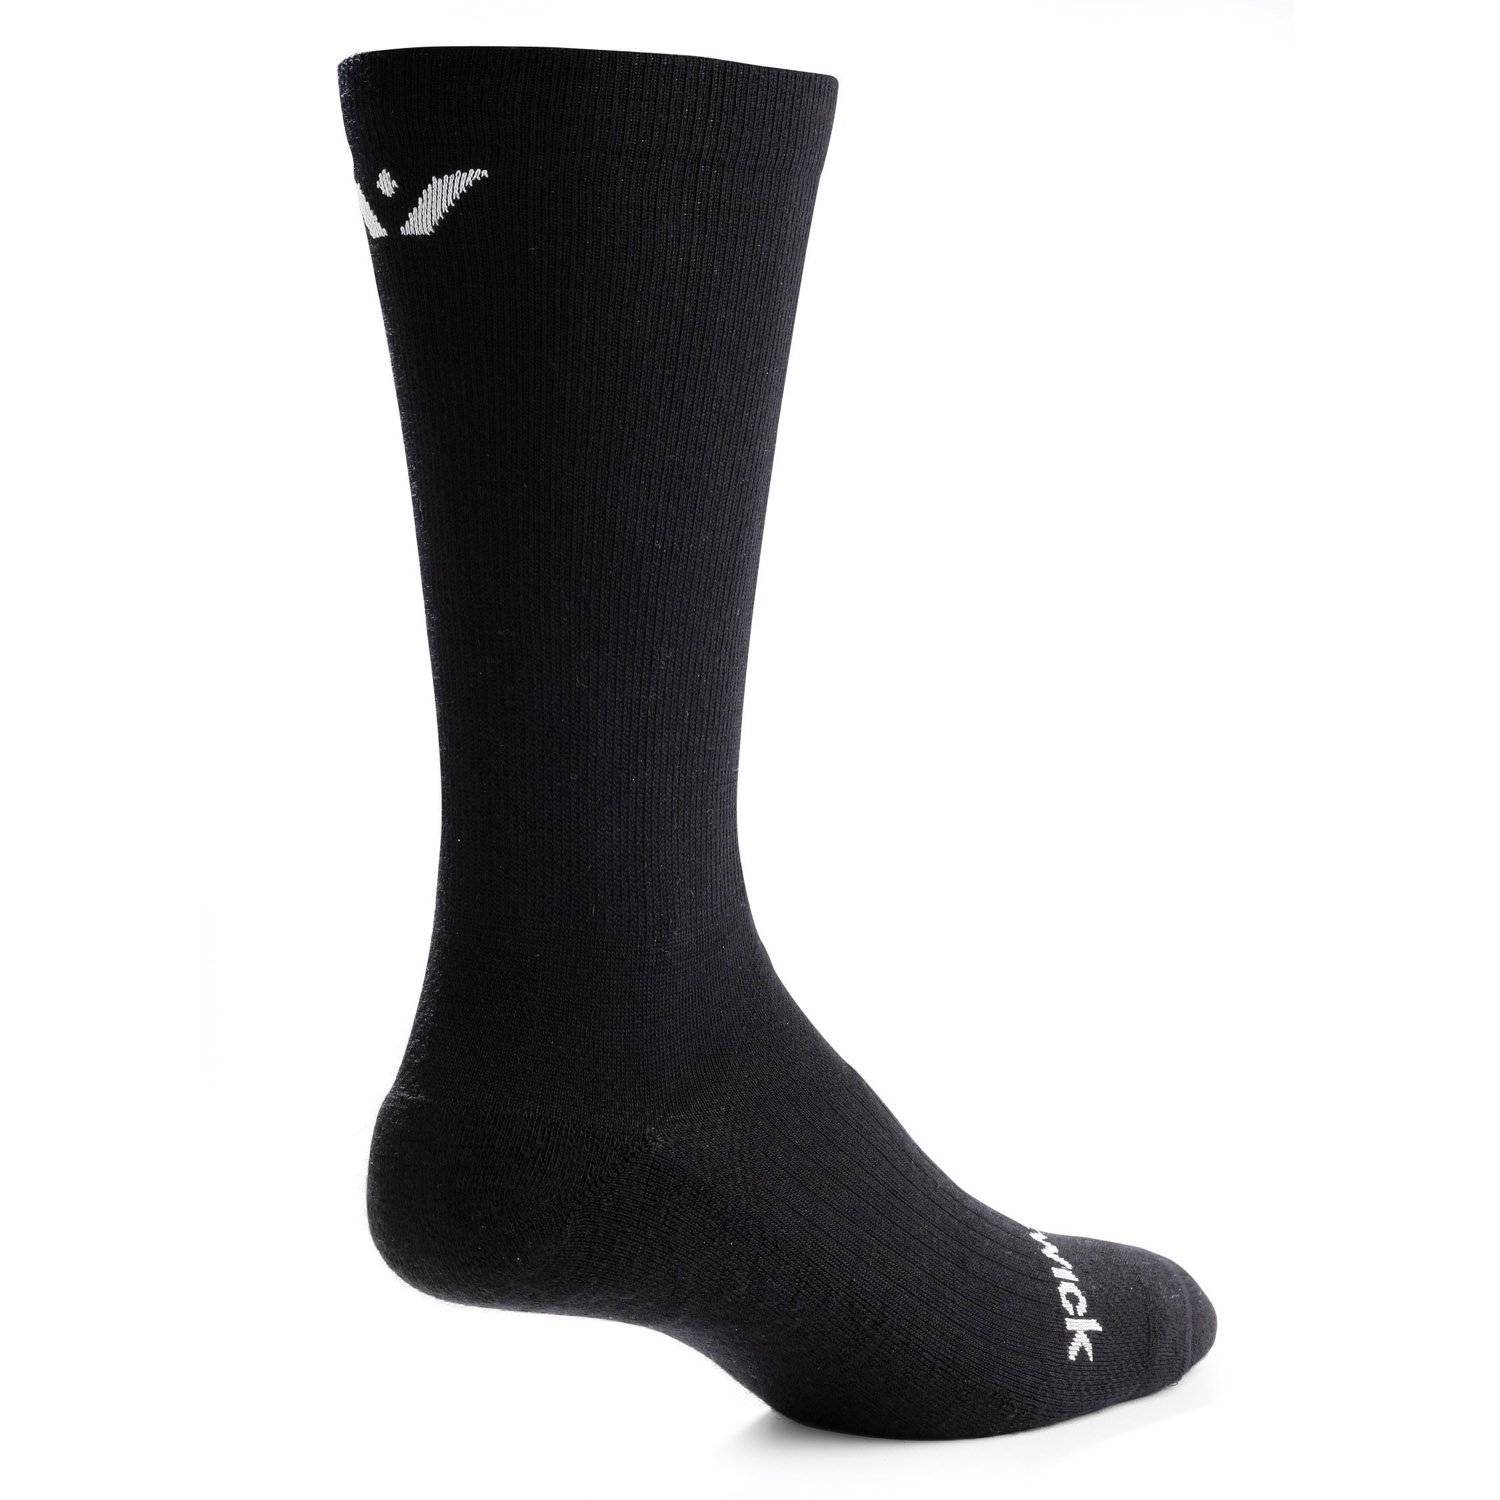 Swiftwick Pursuit Mid Calf Uniform Socks